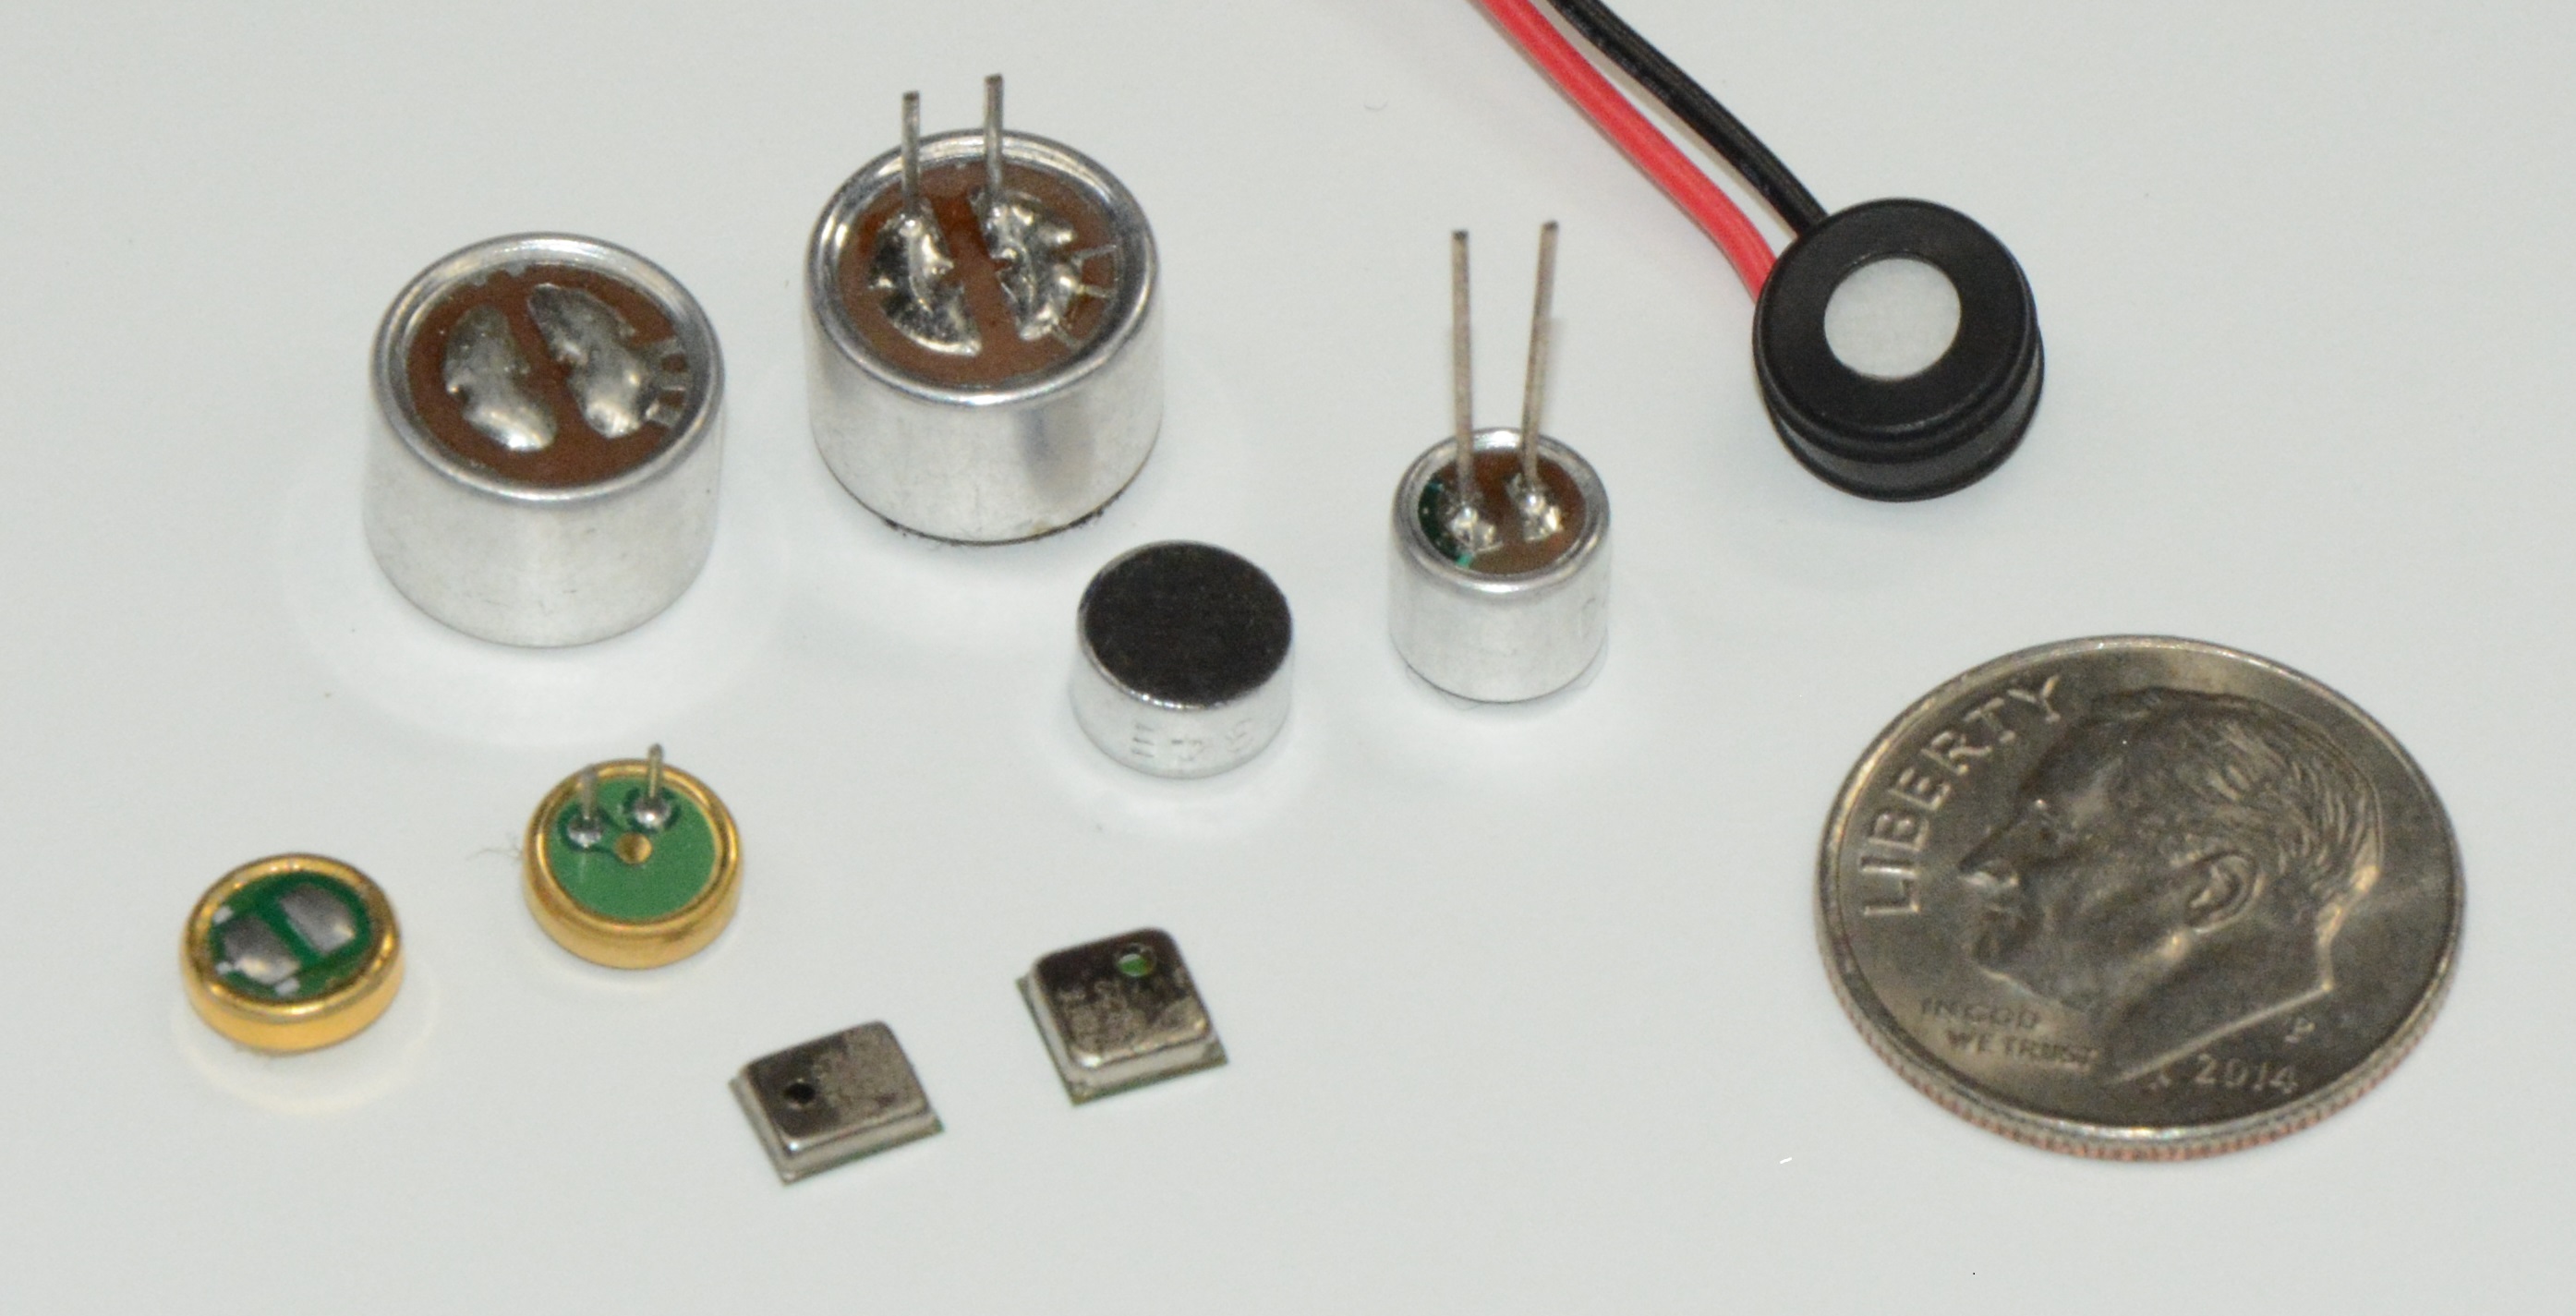 MEMS electret microphones transducers